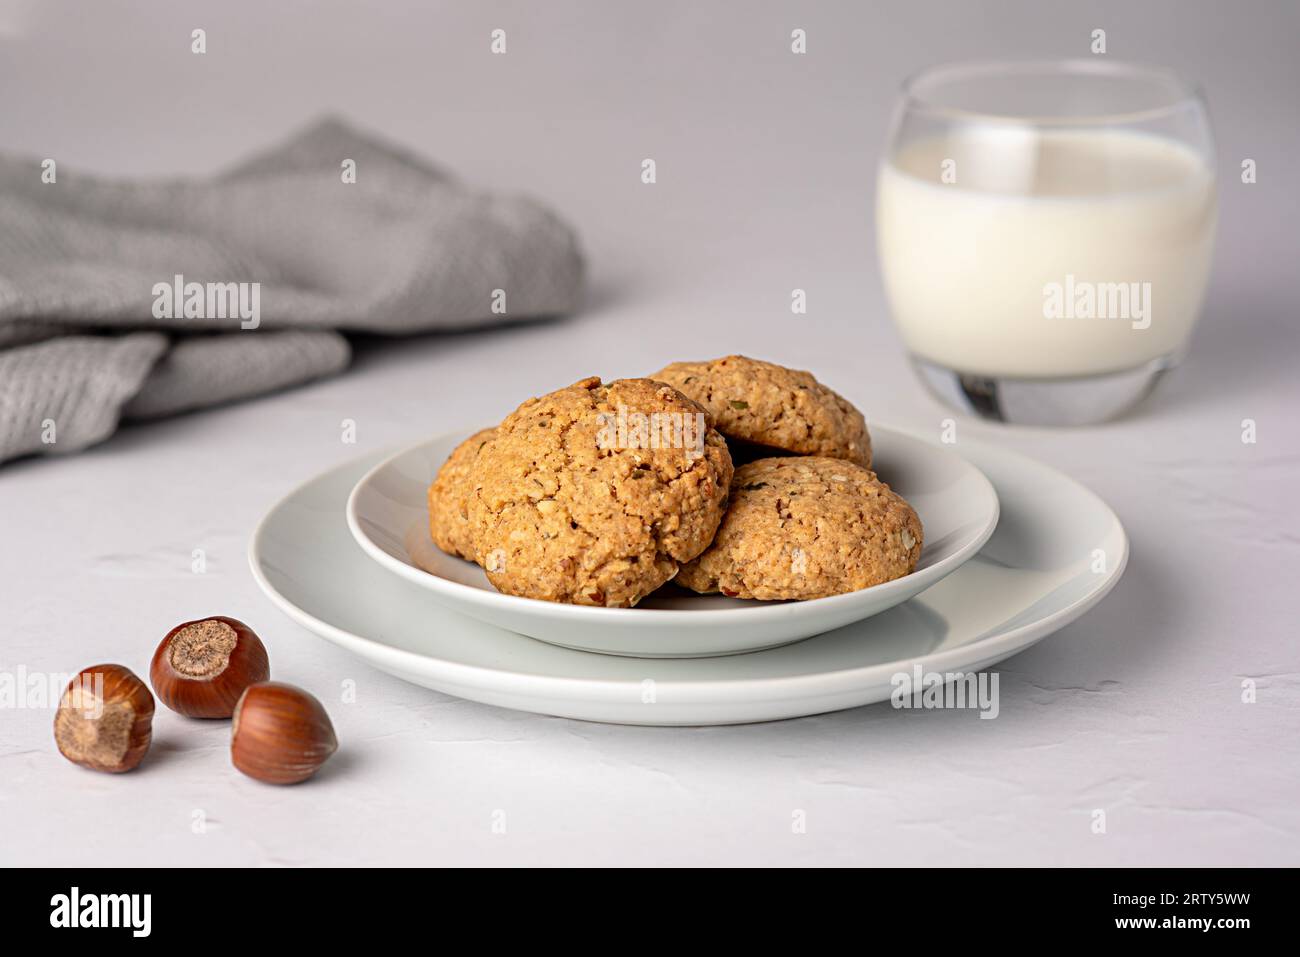 https://c8.alamy.com/comp/2RTY5WW/food-photography-of-oat-biscuit-oatmeal-cookienut-hazelnut-pastry-milk-glass-plate-2RTY5WW.jpg